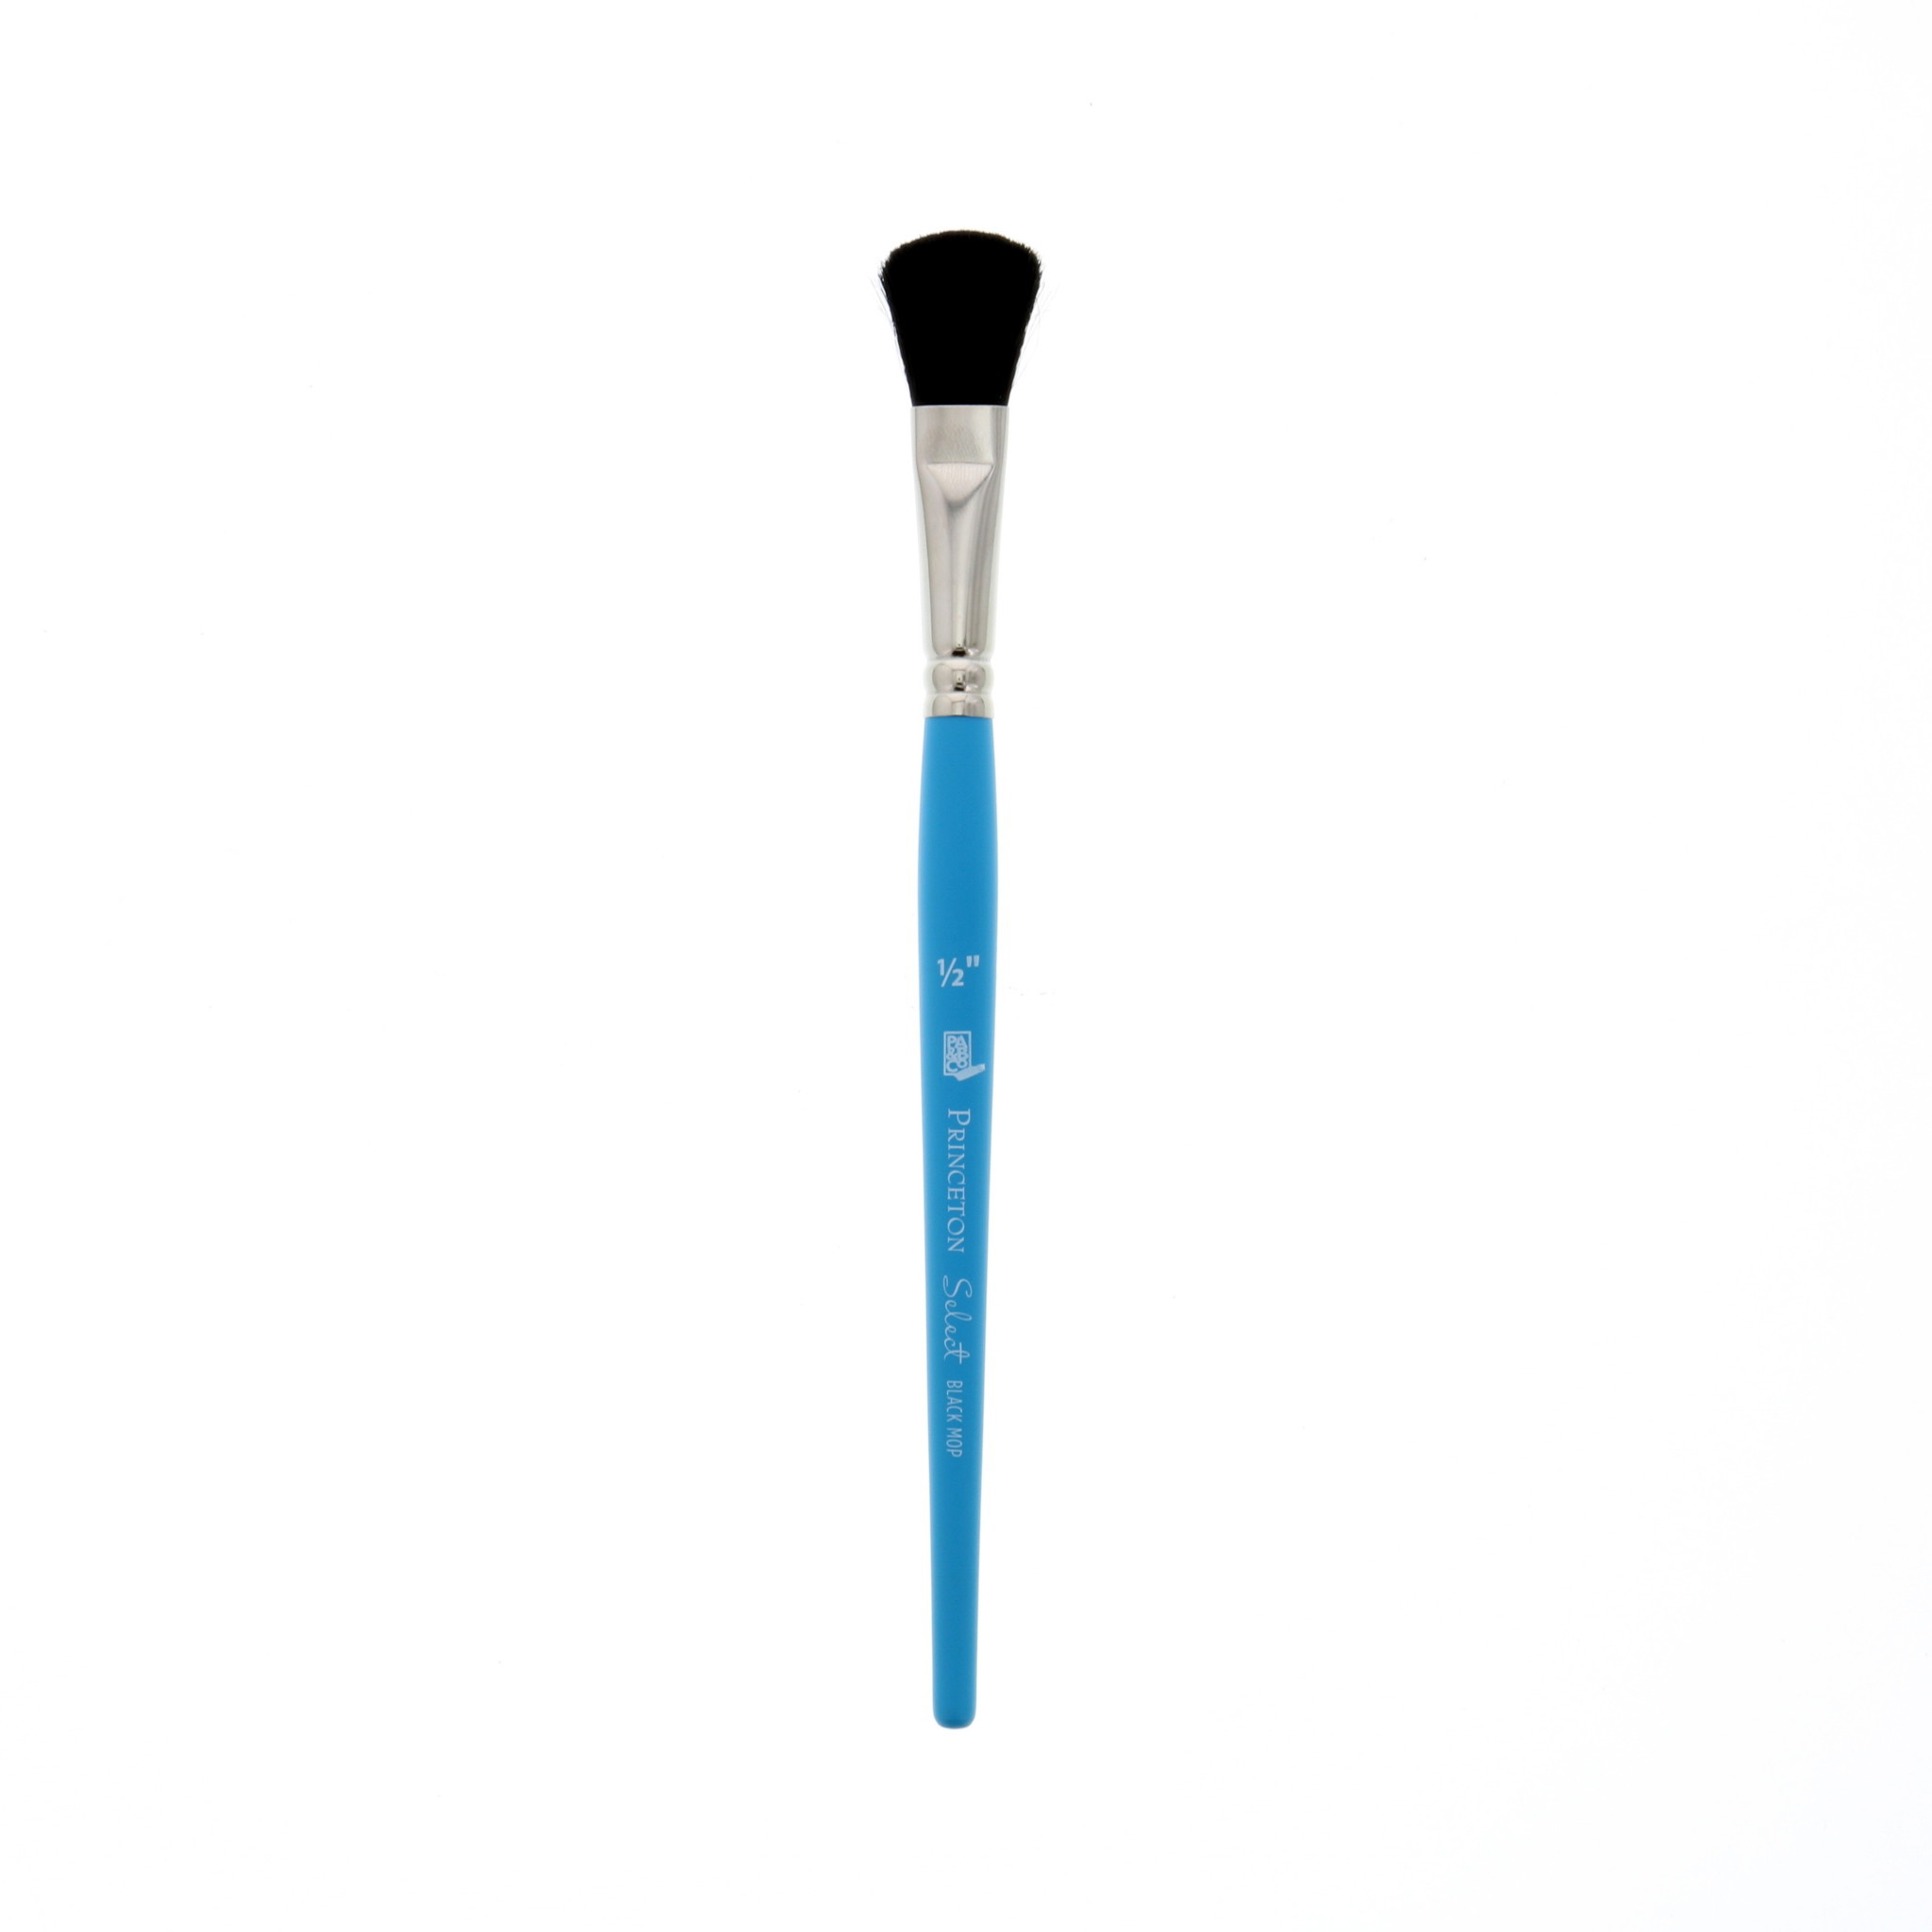 Princeton Select Natural Brush - Fluffy Mop, Short Handle, Size 1/4